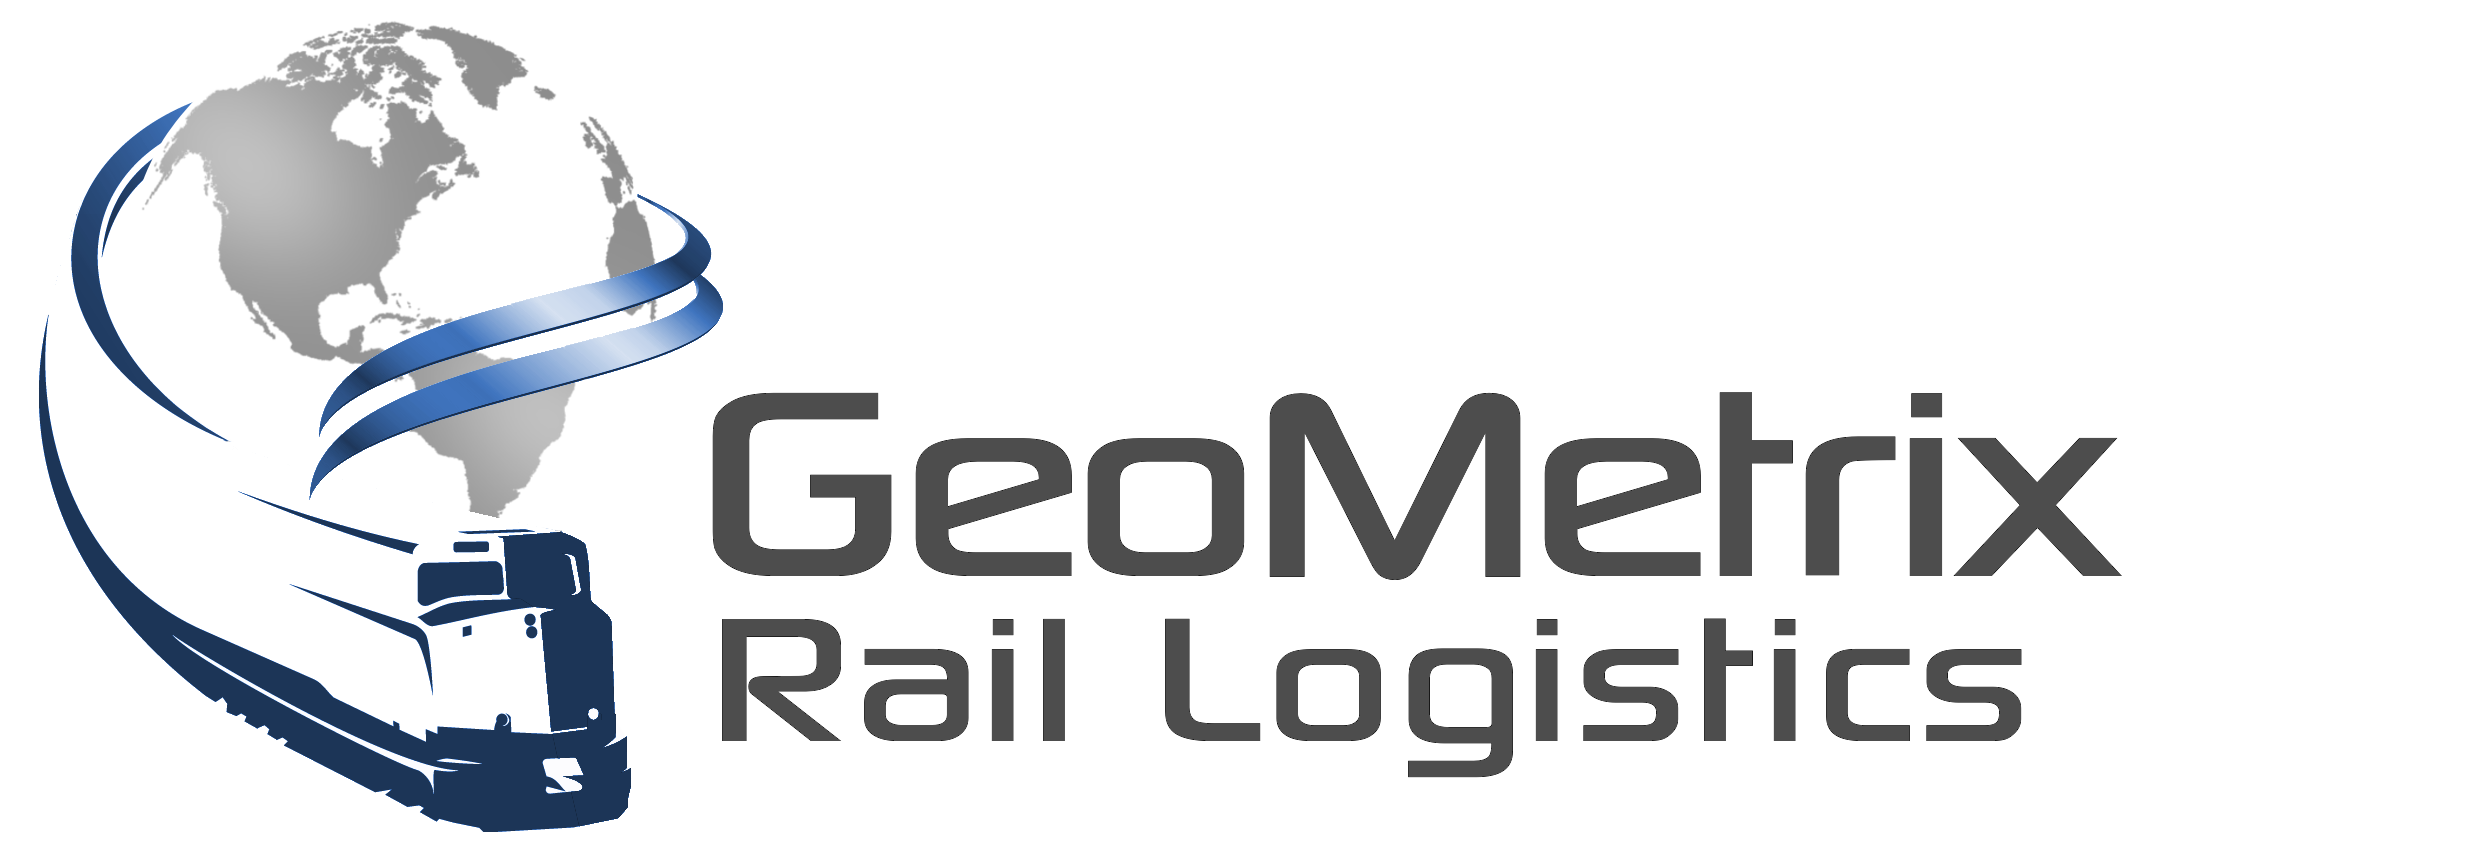 Aegex Technologies Announces GeoMetrix as a Reseller Partner